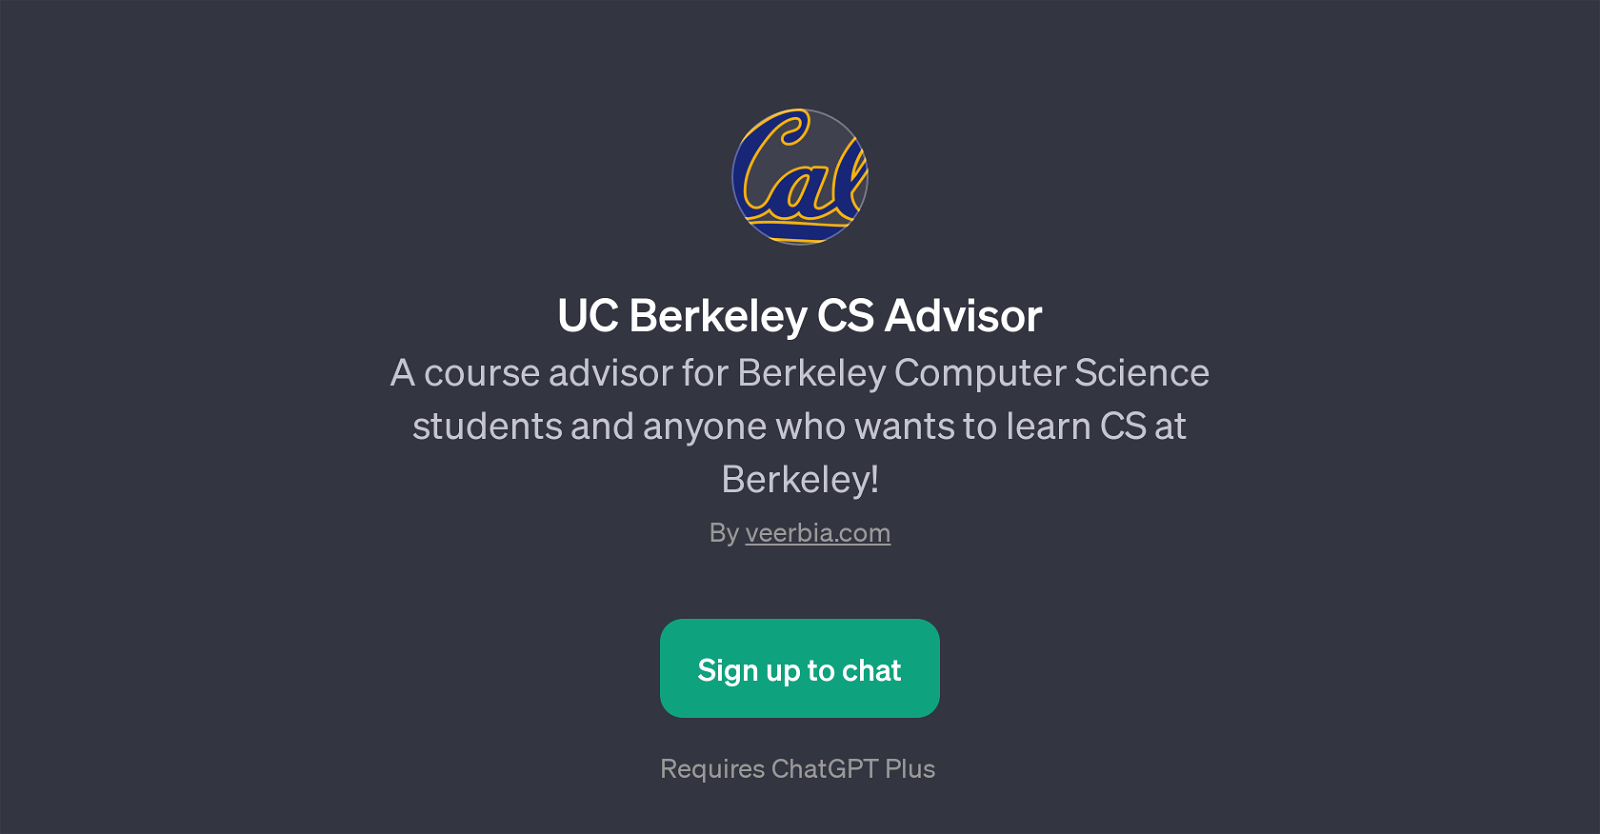 UC Berkeley CS Advisor website